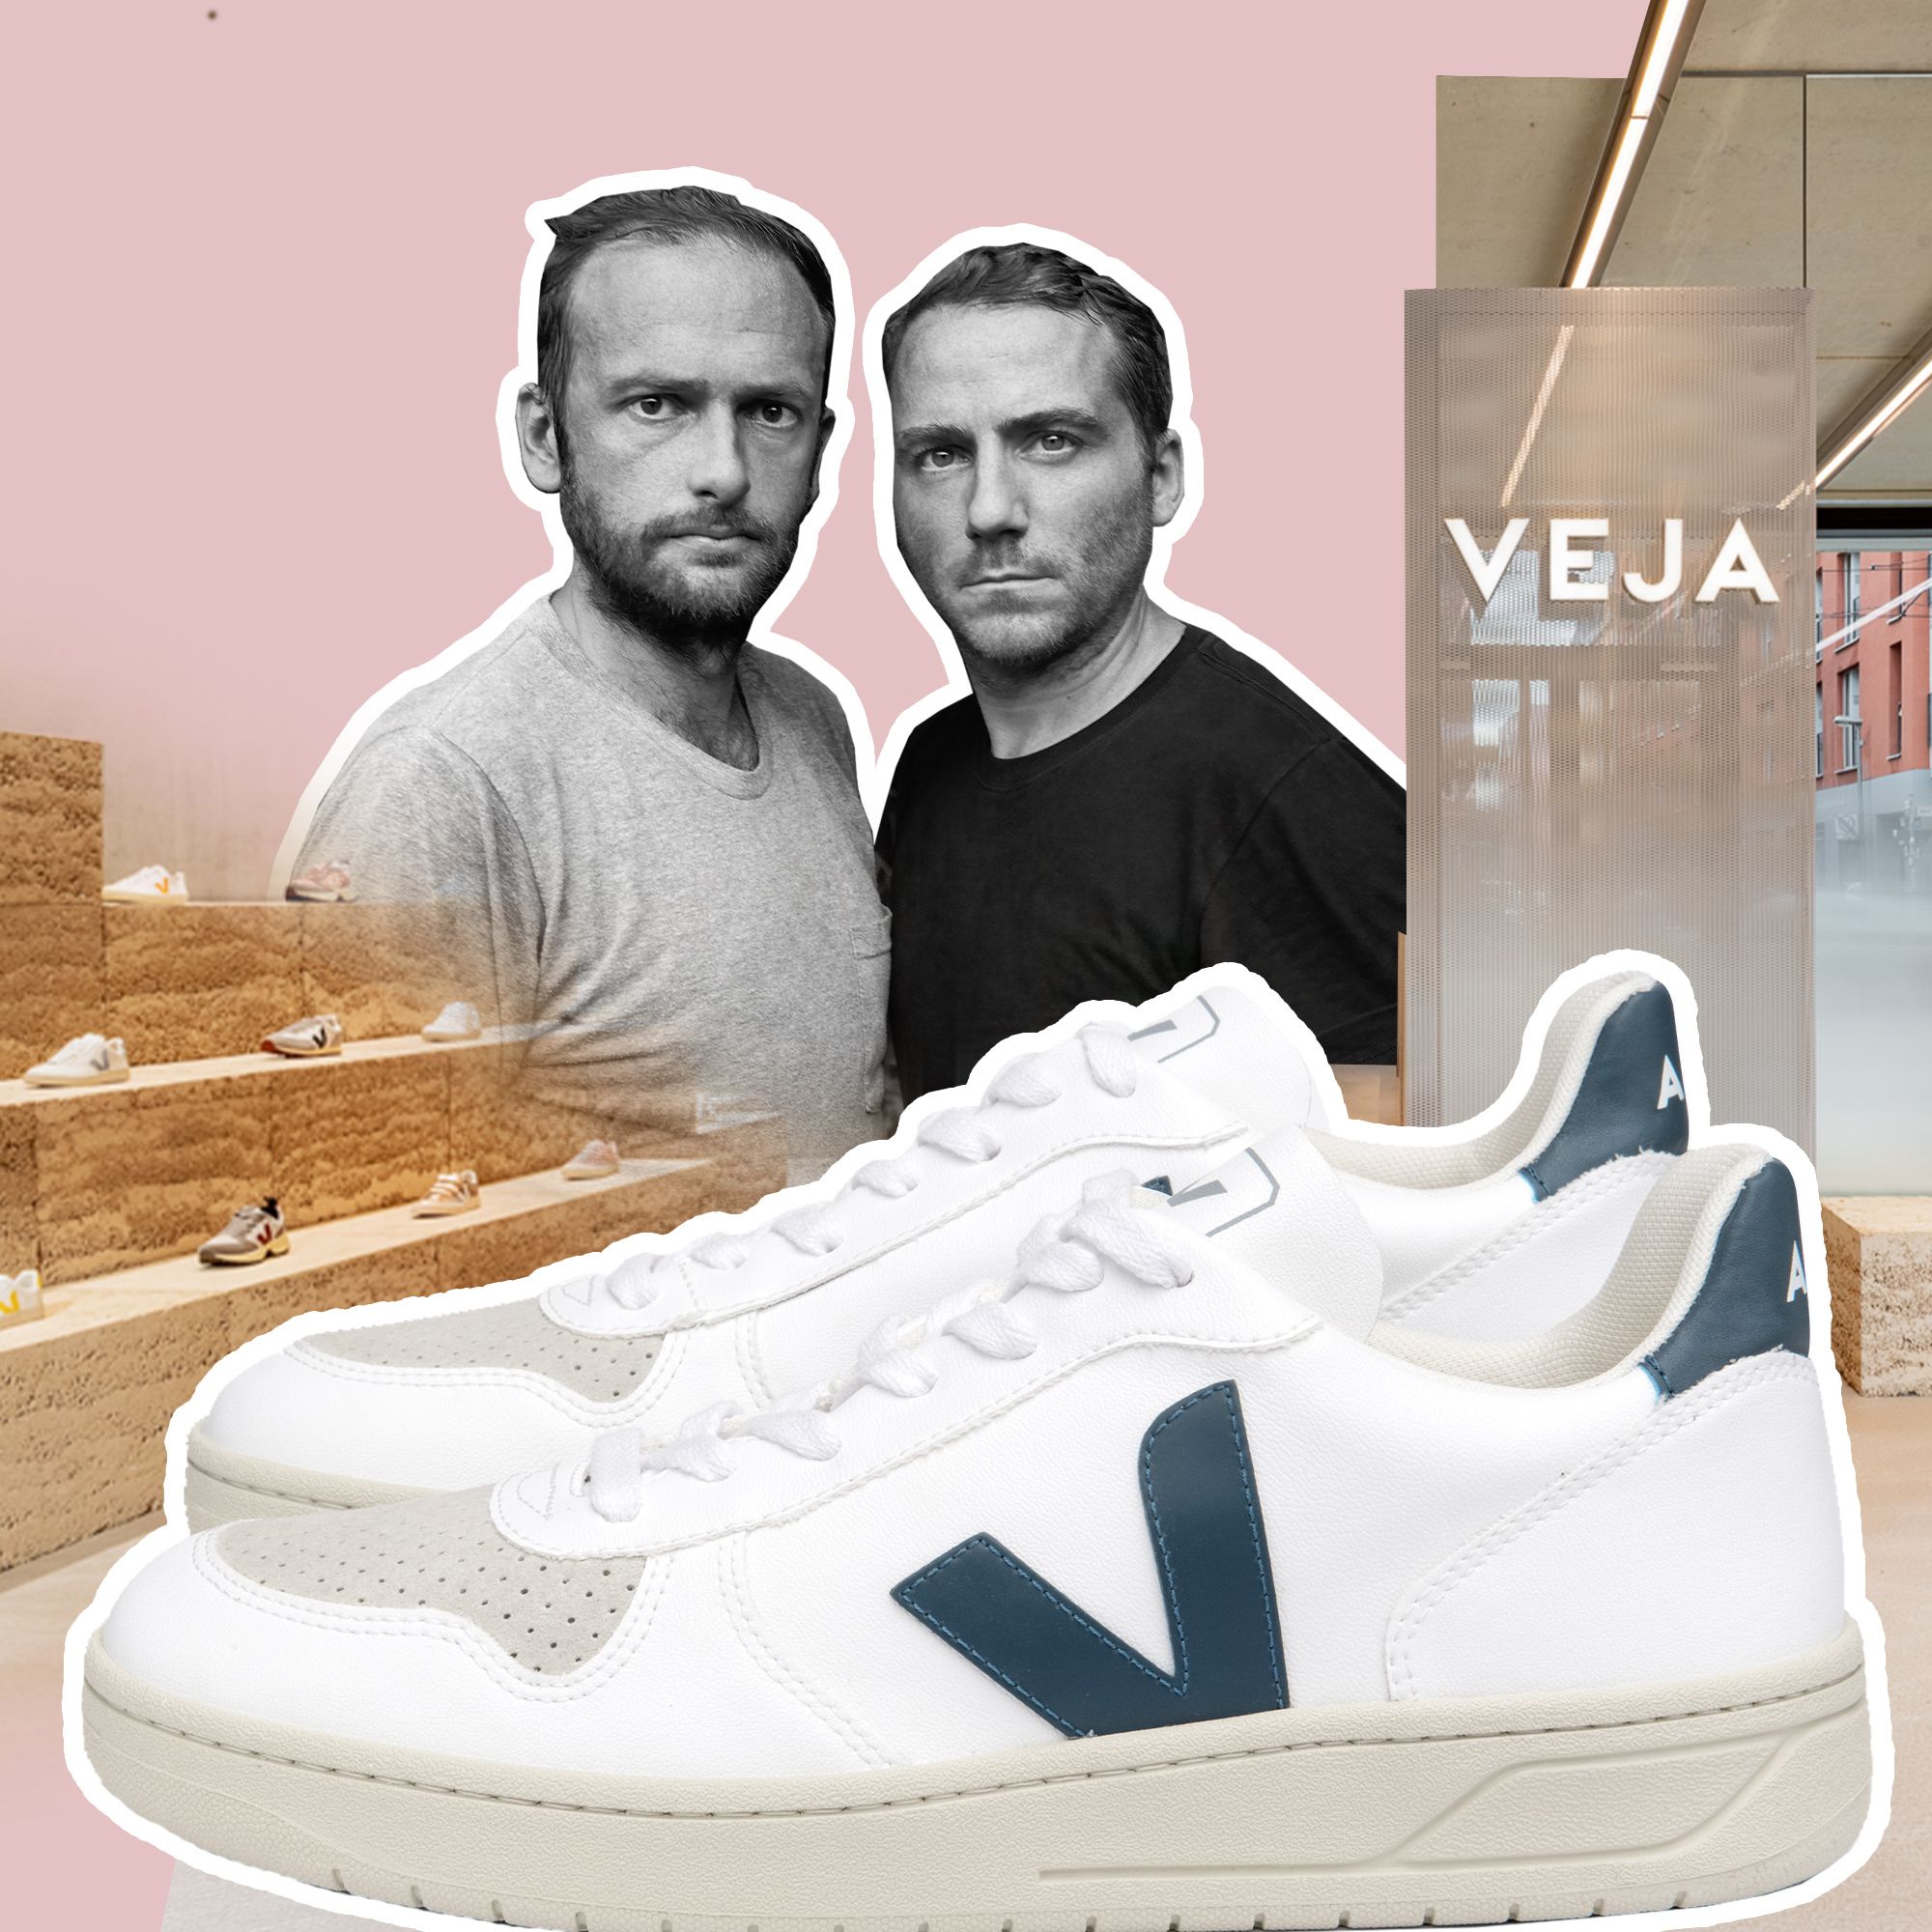 Veja Built a Booming Sneaker Brand by Breaking Every Rule